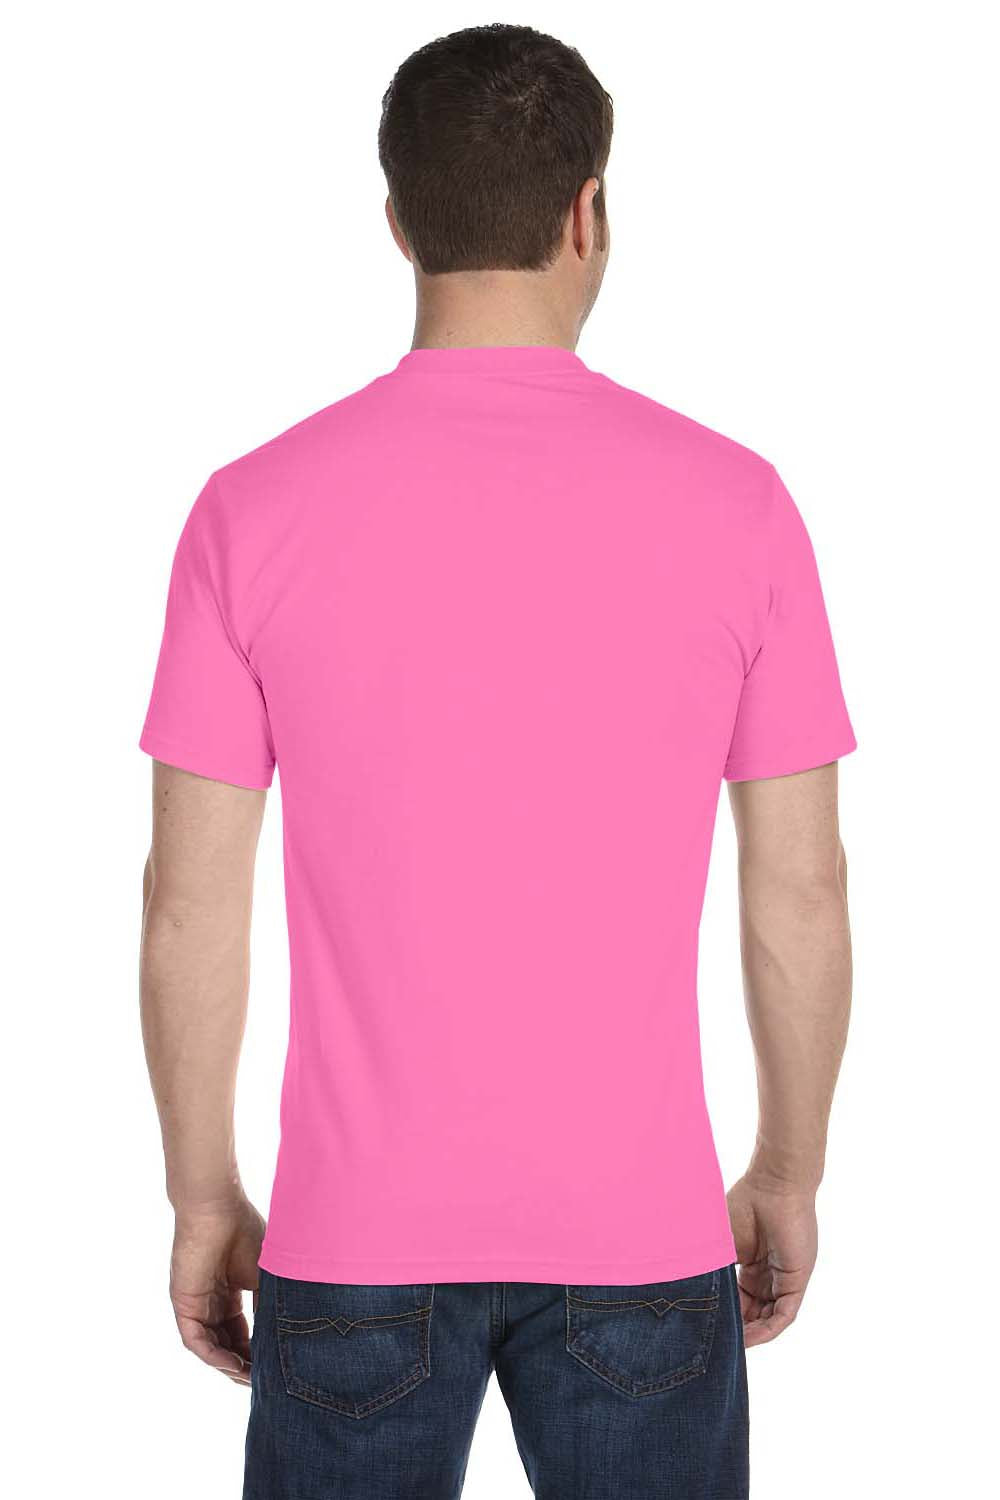 Gildan G800 Mens DryBlend Moisture Wicking Short Sleeve Crewneck T-Shirt Azalea Pink Back